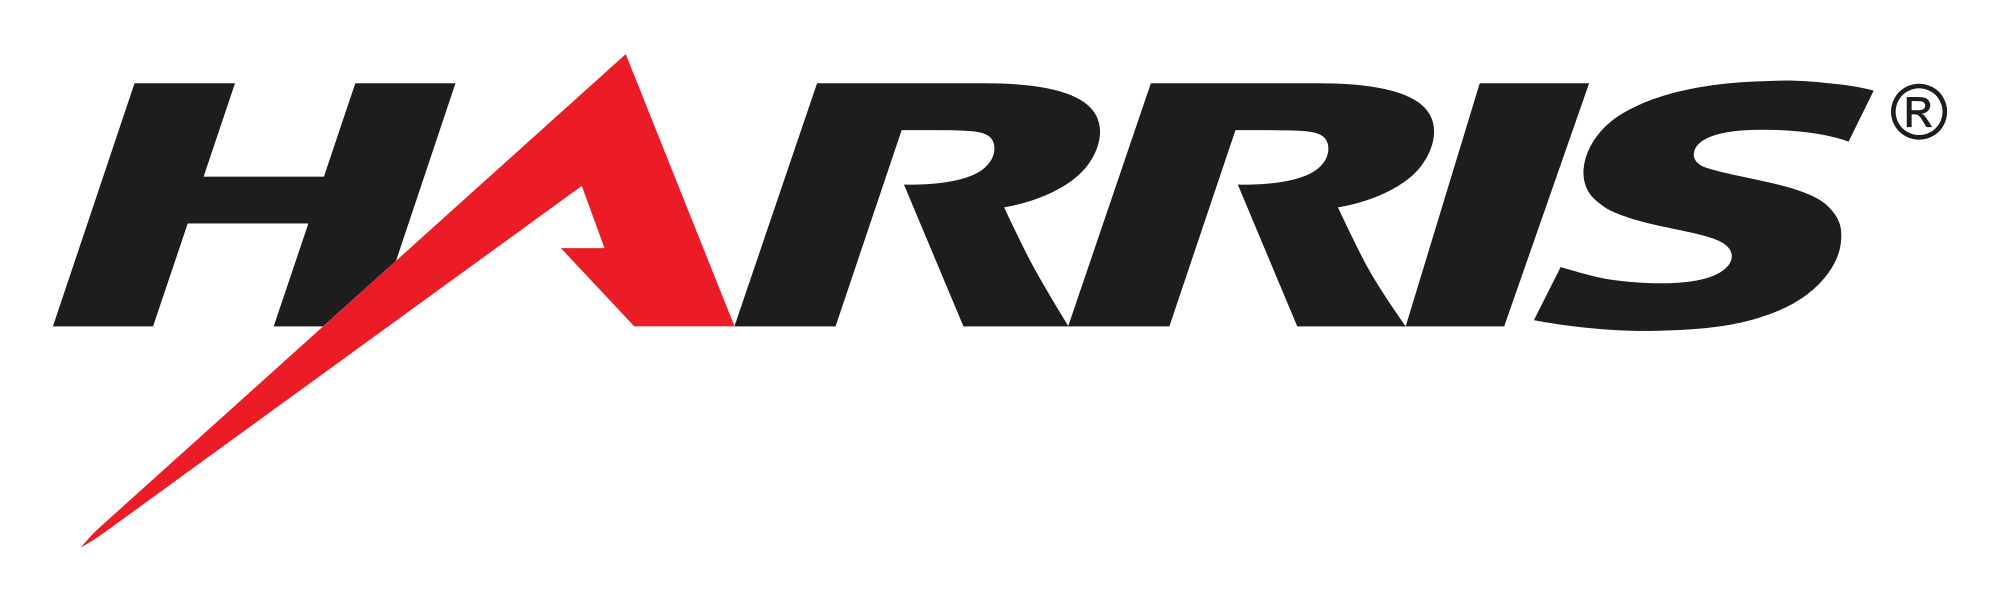 harris_corporation_logo-svg